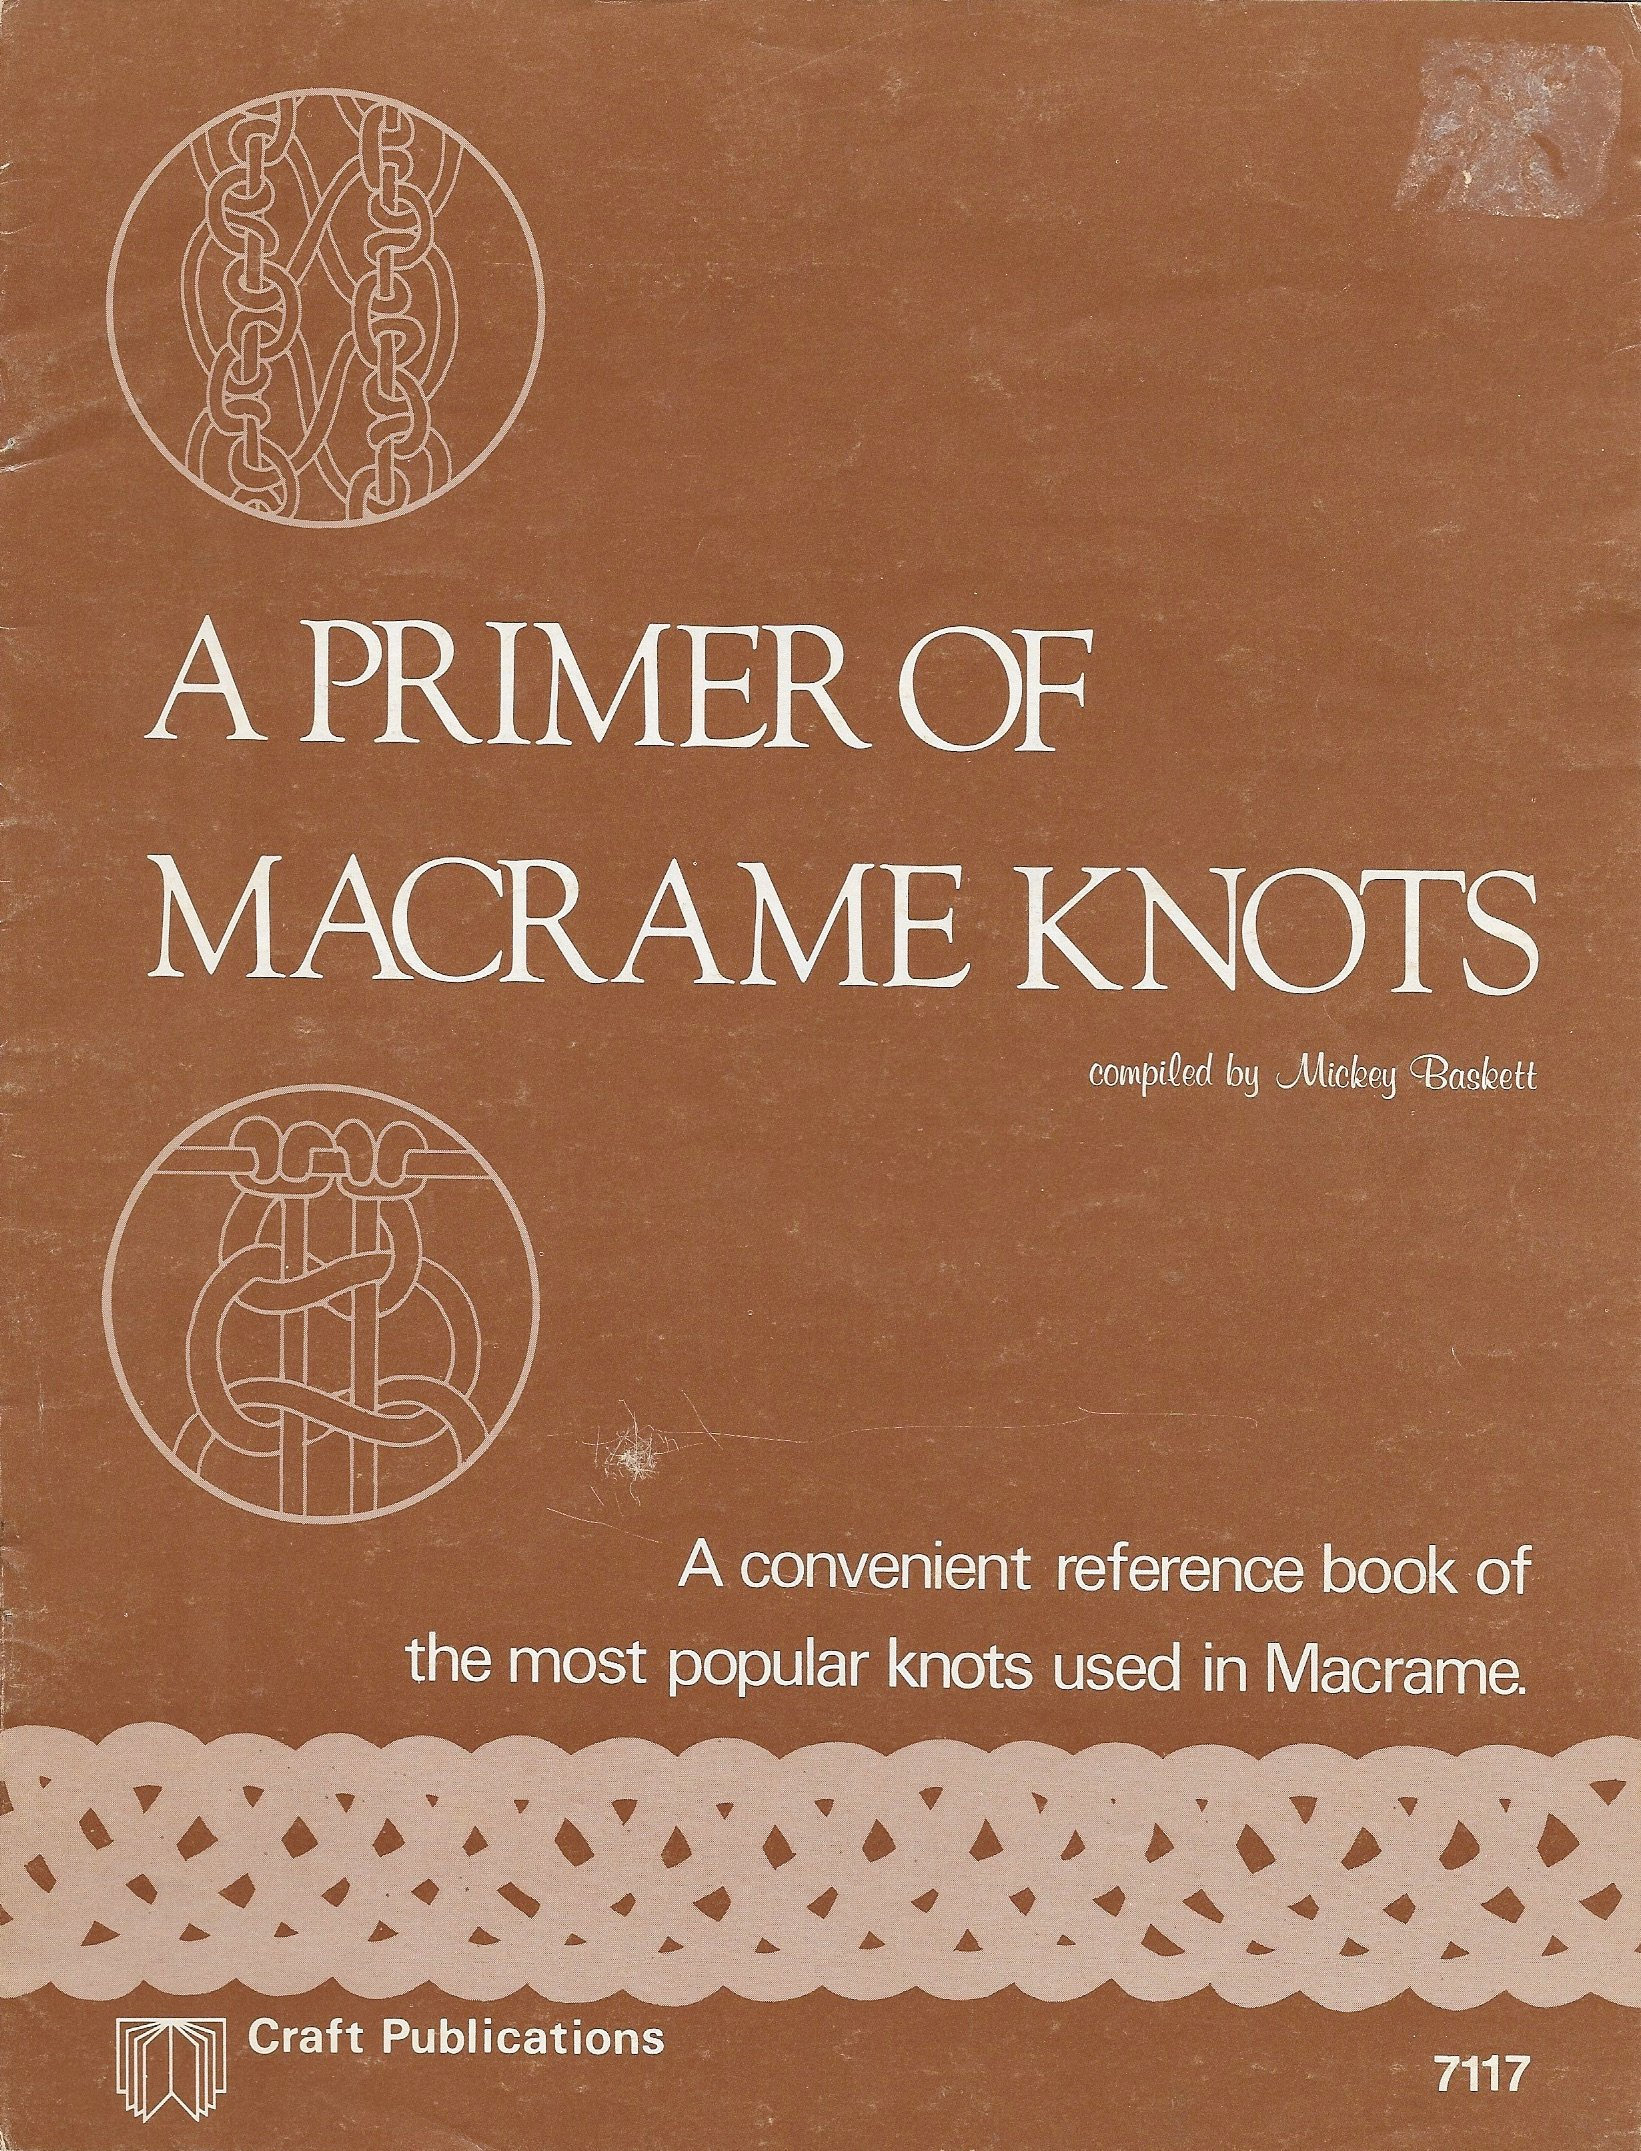 Macramé Home Furnishings 1970s Macrame Knots How to Instruction